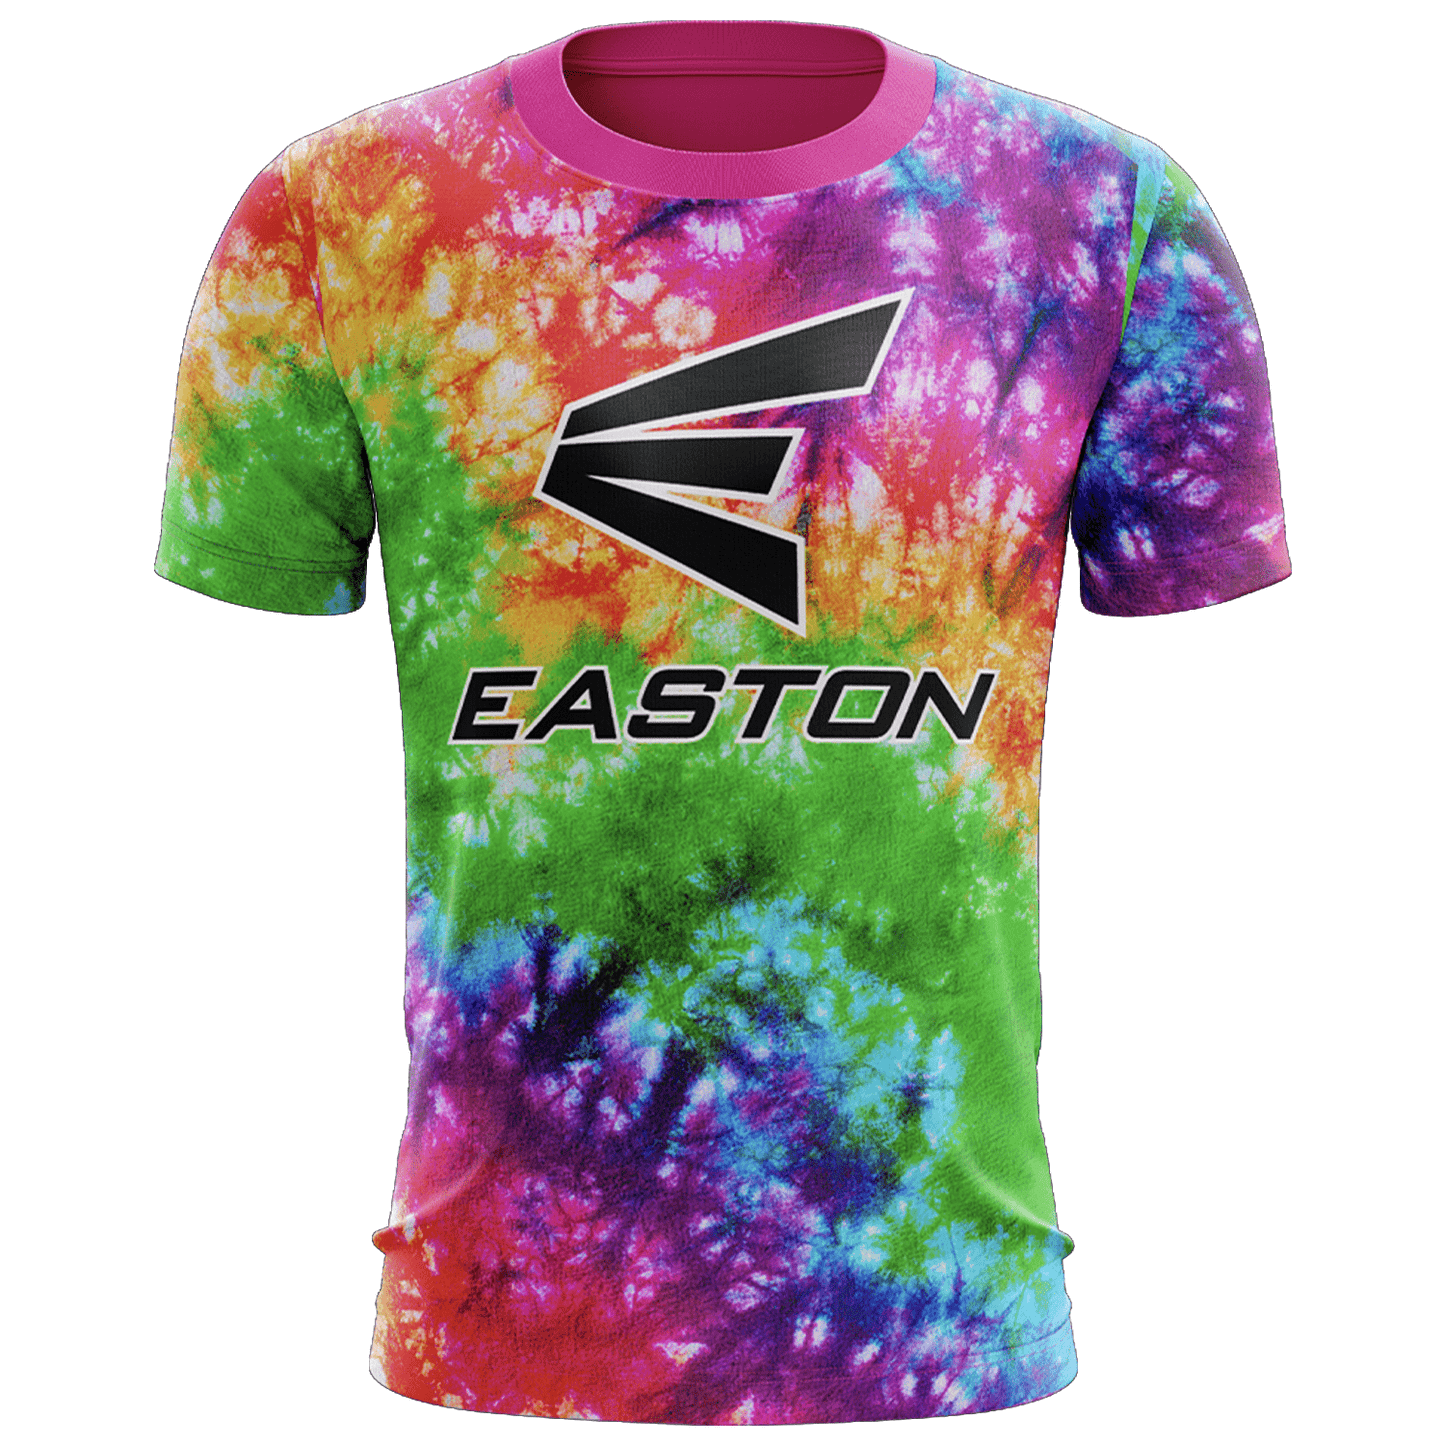 Easton EVO-Tech Short Sleeve Shirt - Rainbow Tie Dye